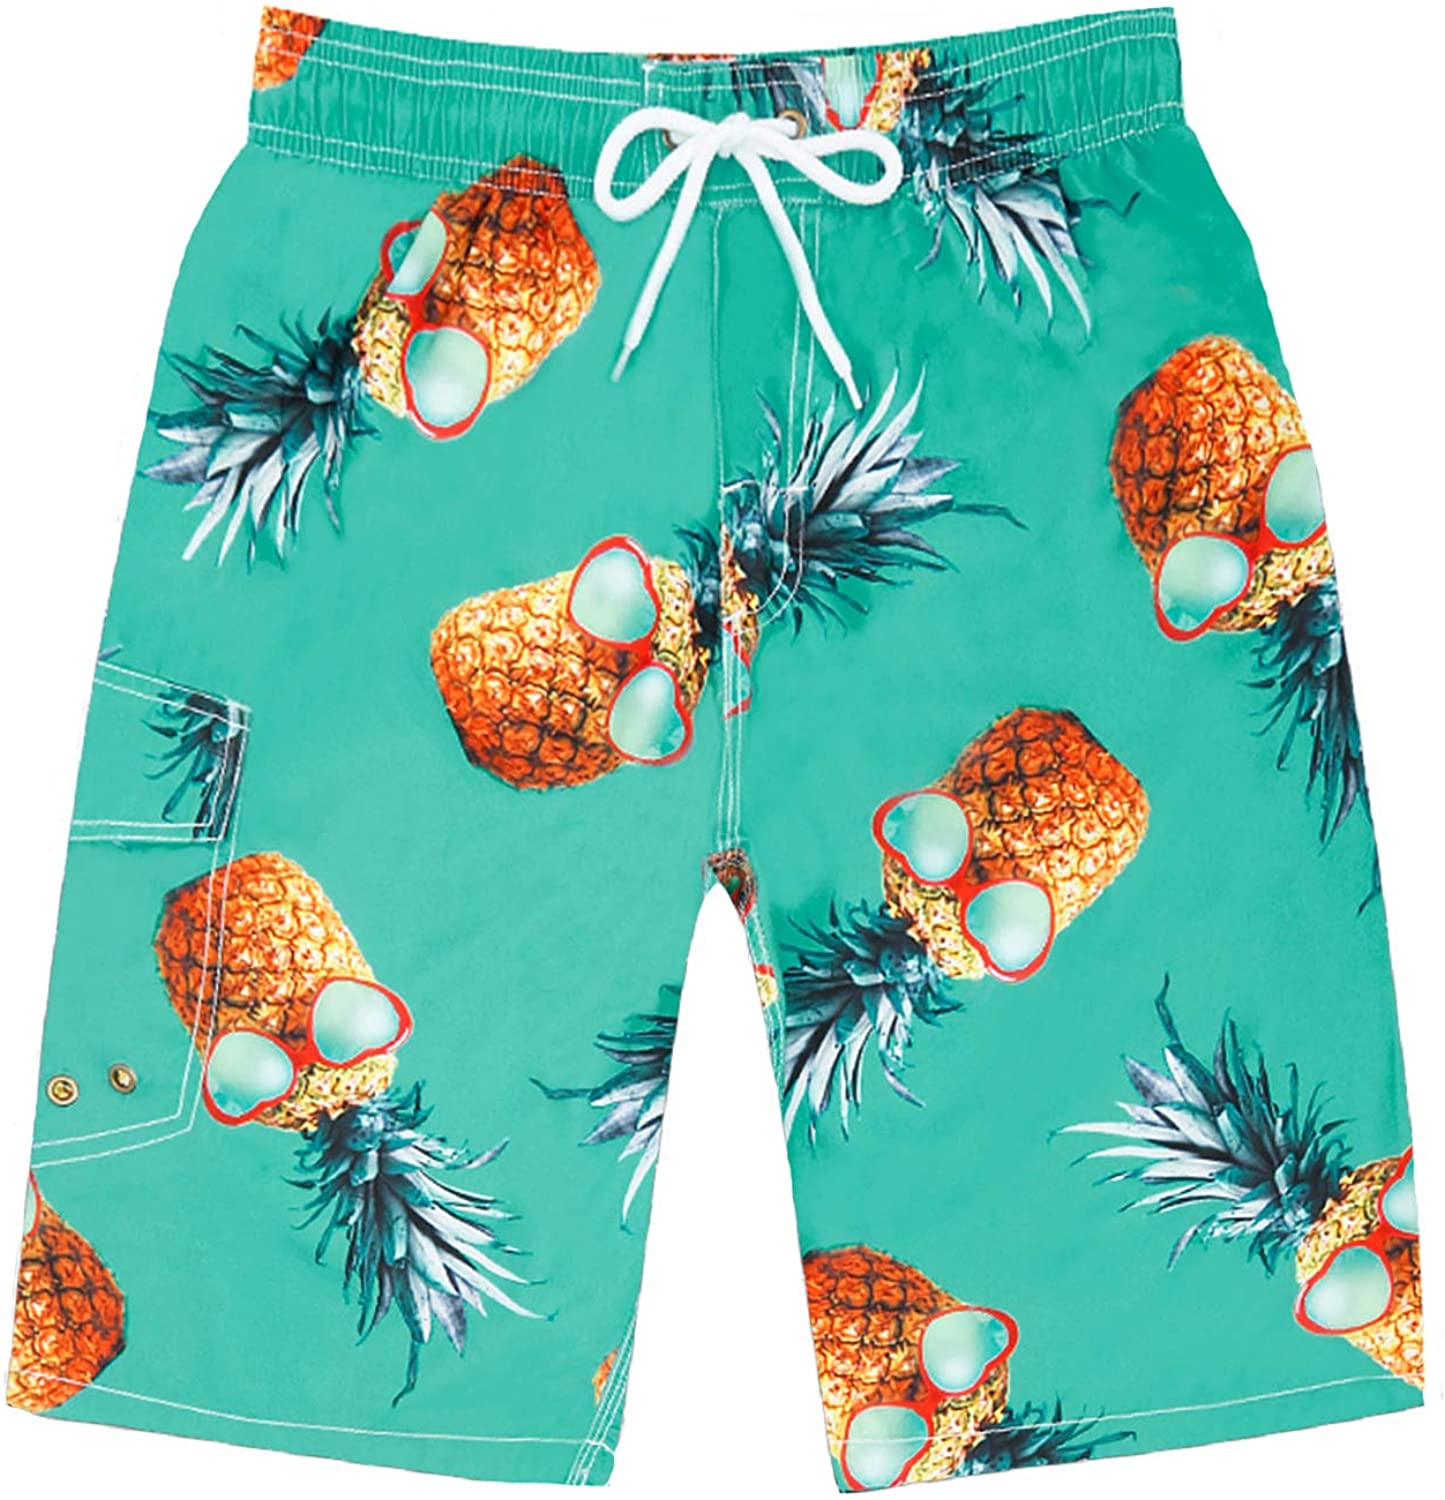 Colorful Novelty Swimwear for Men Boys Quick Dry Funny Swim Trunks Beach  Shorts | eBay